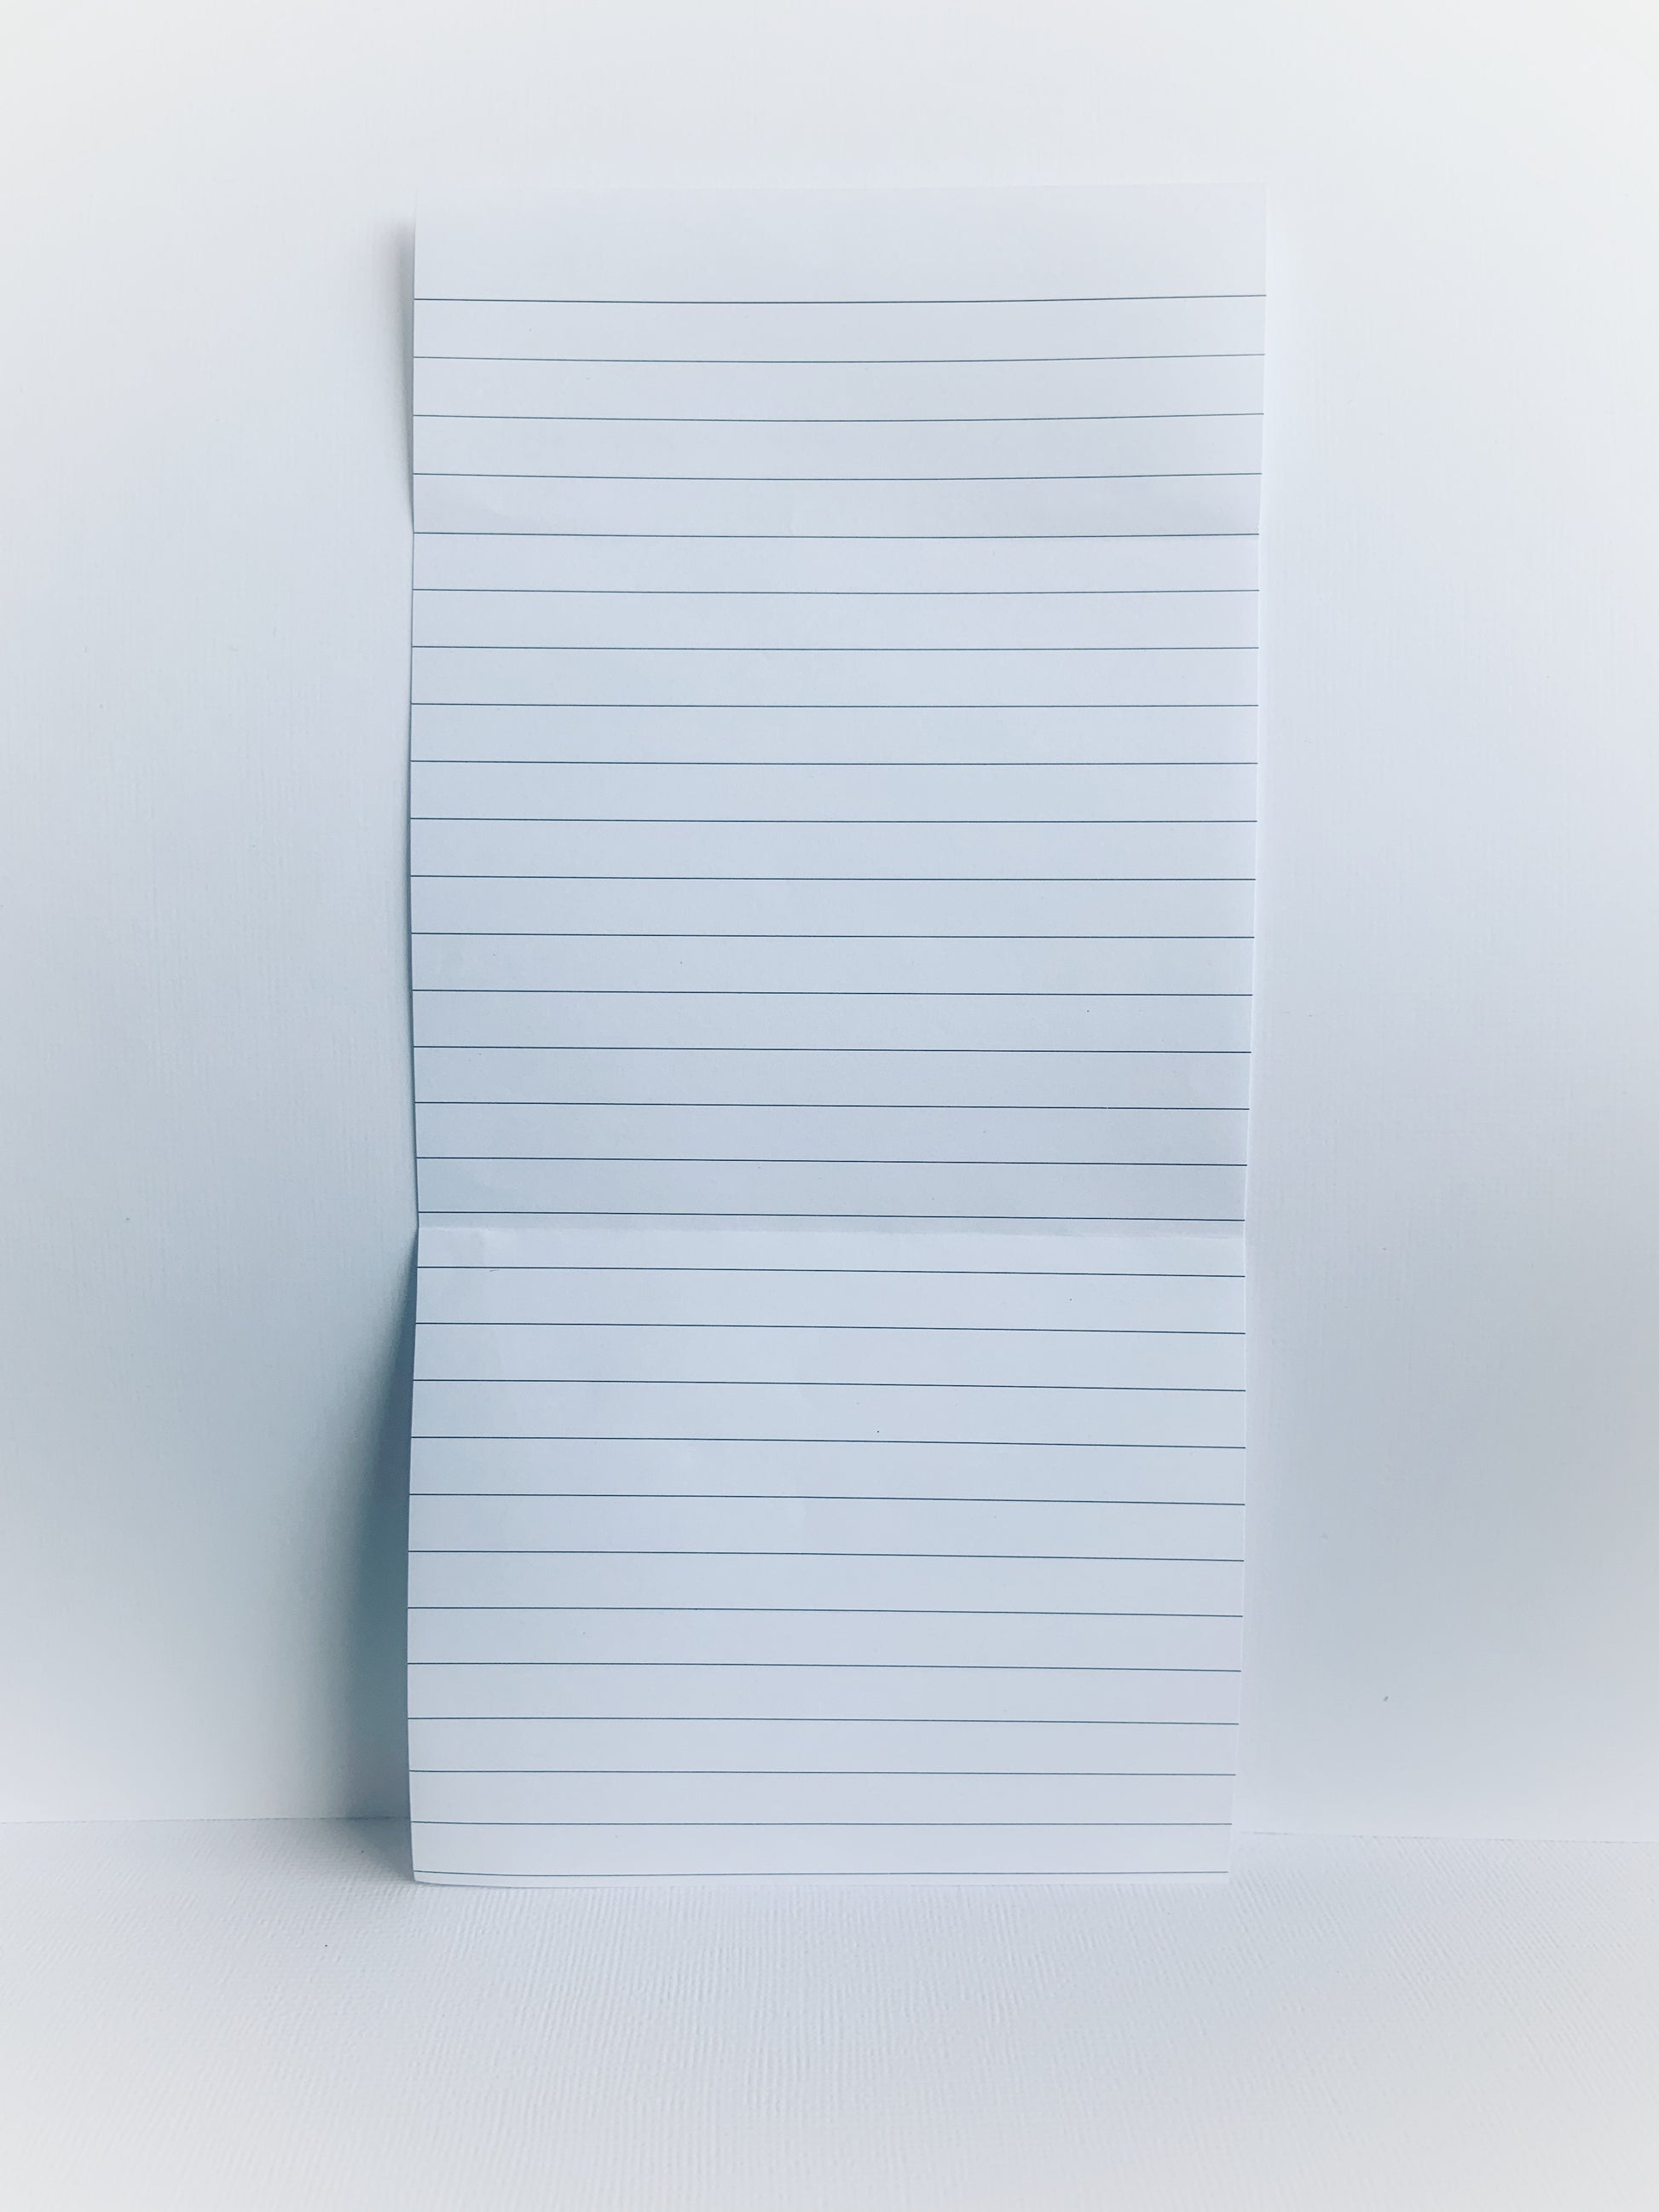 Lined notepaper.